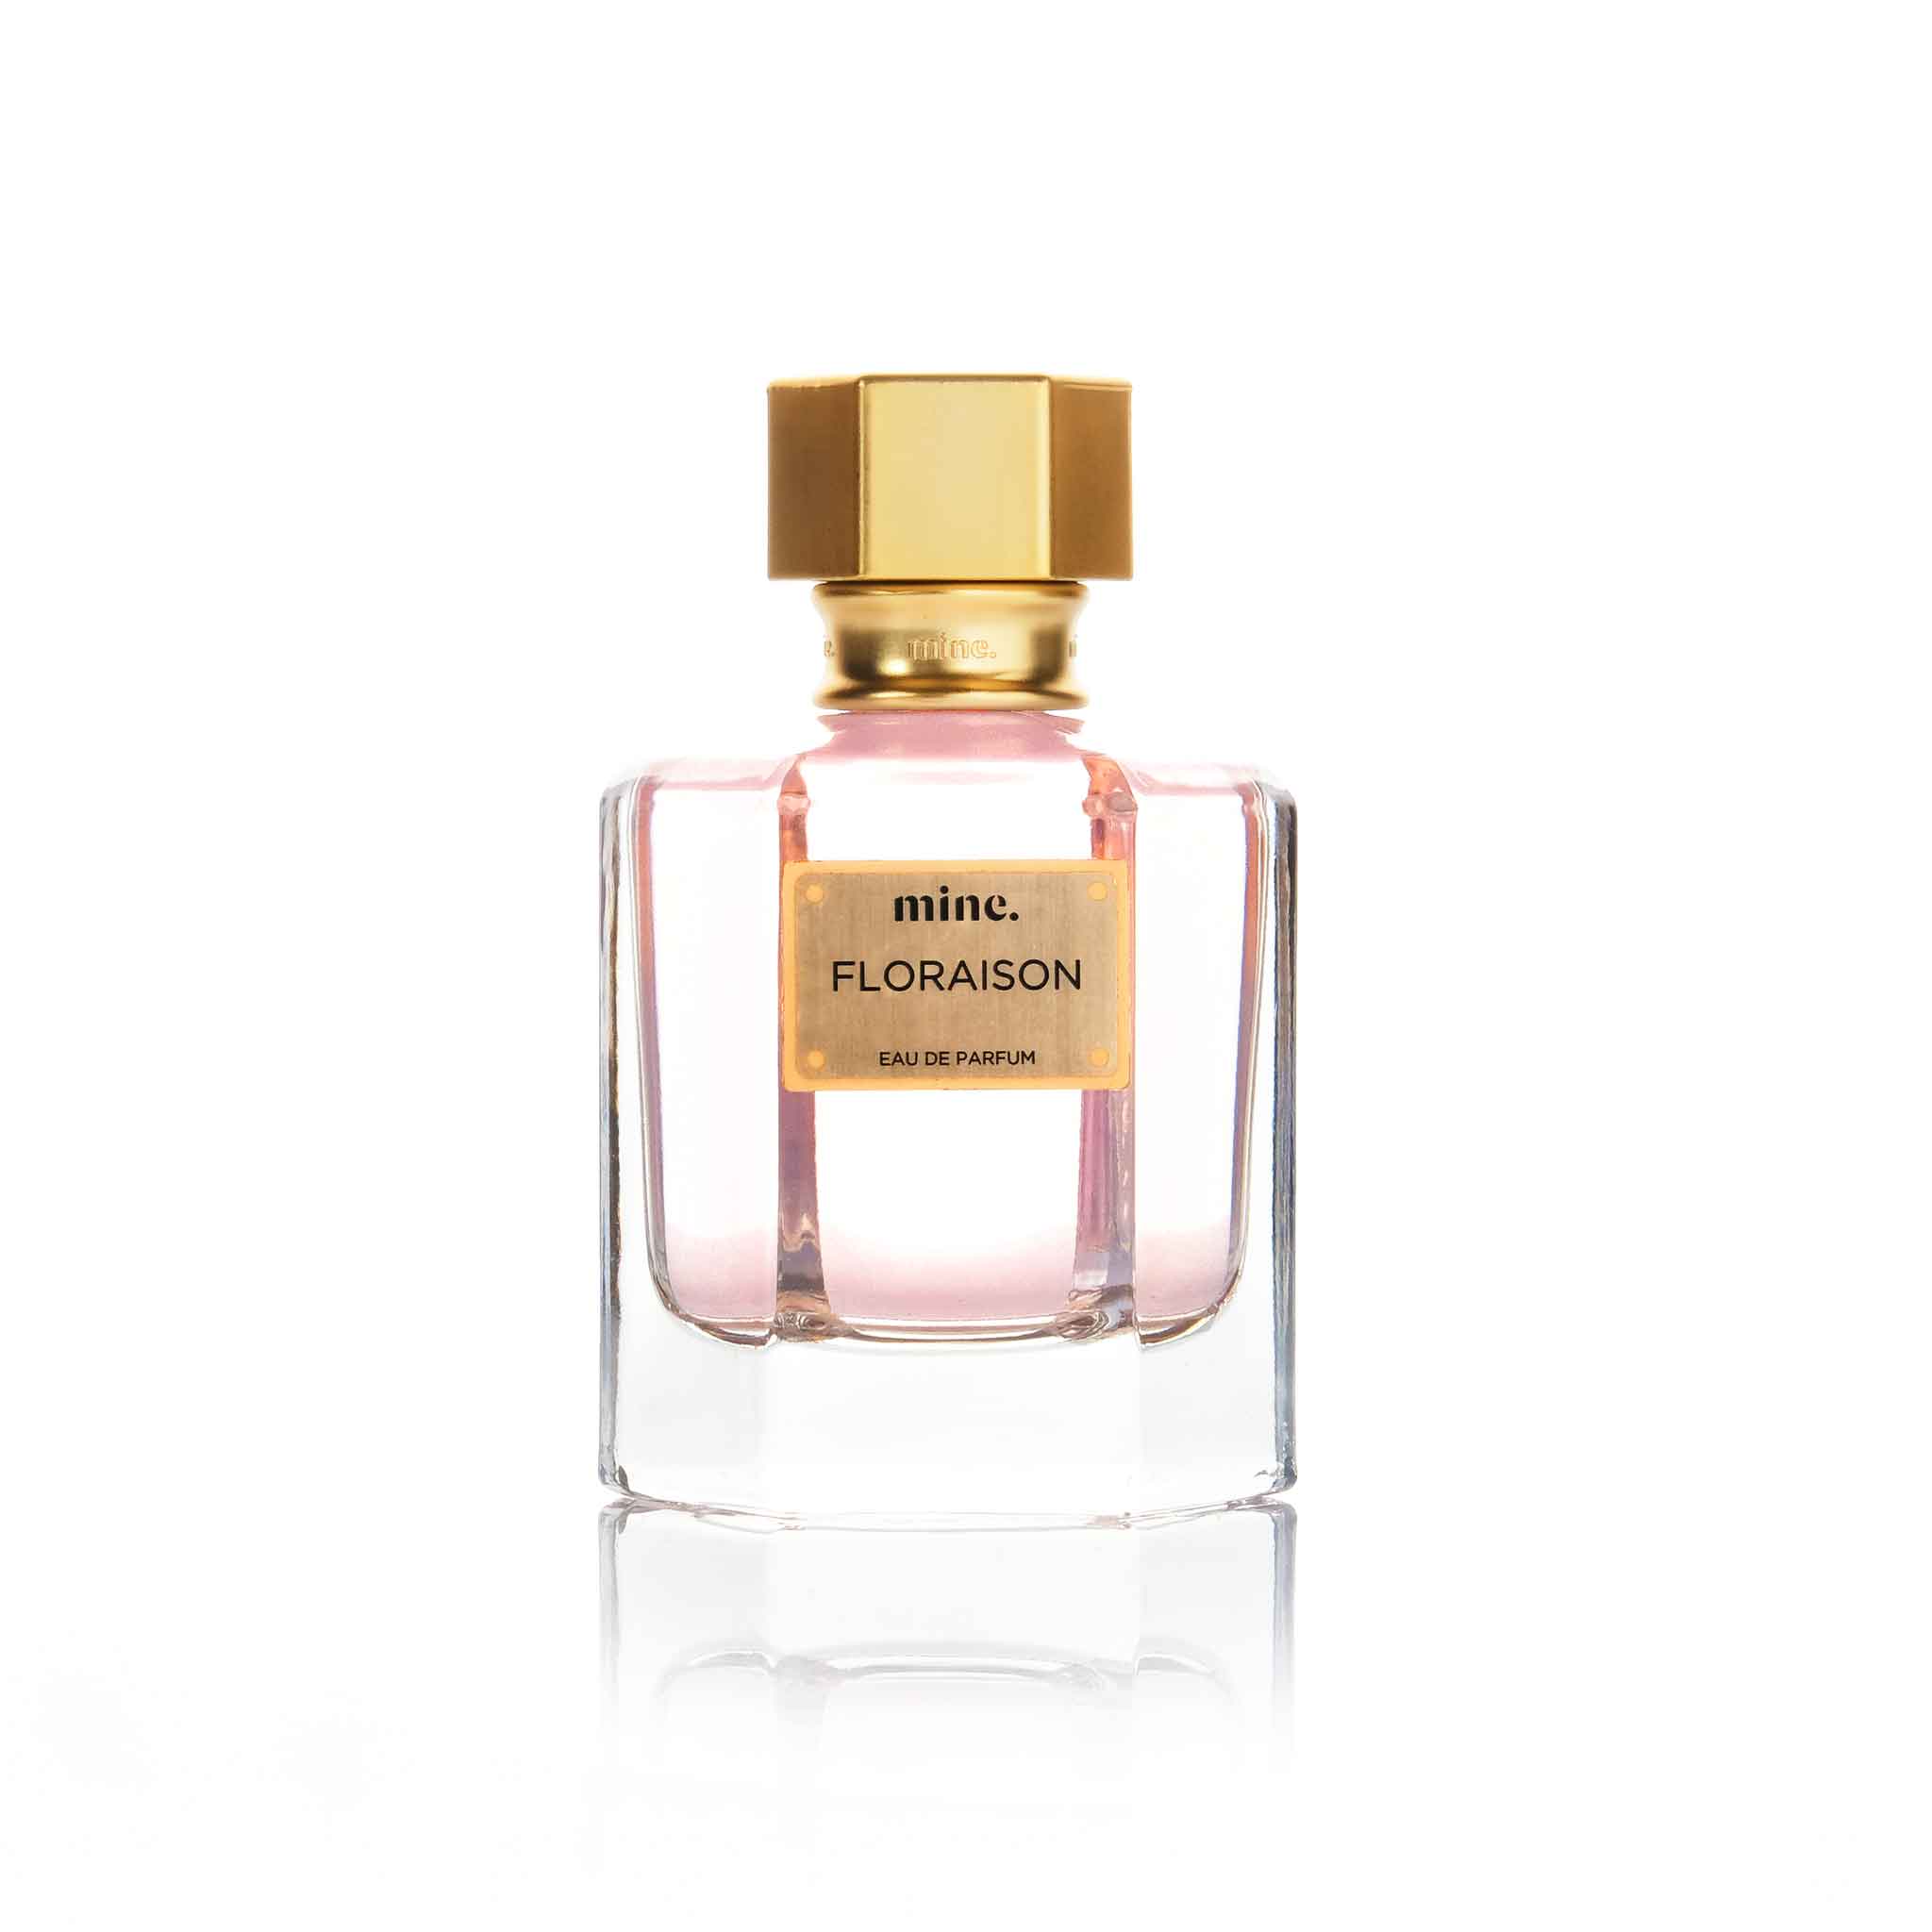 Floraison | perfume by mine. – Mine Perfumery